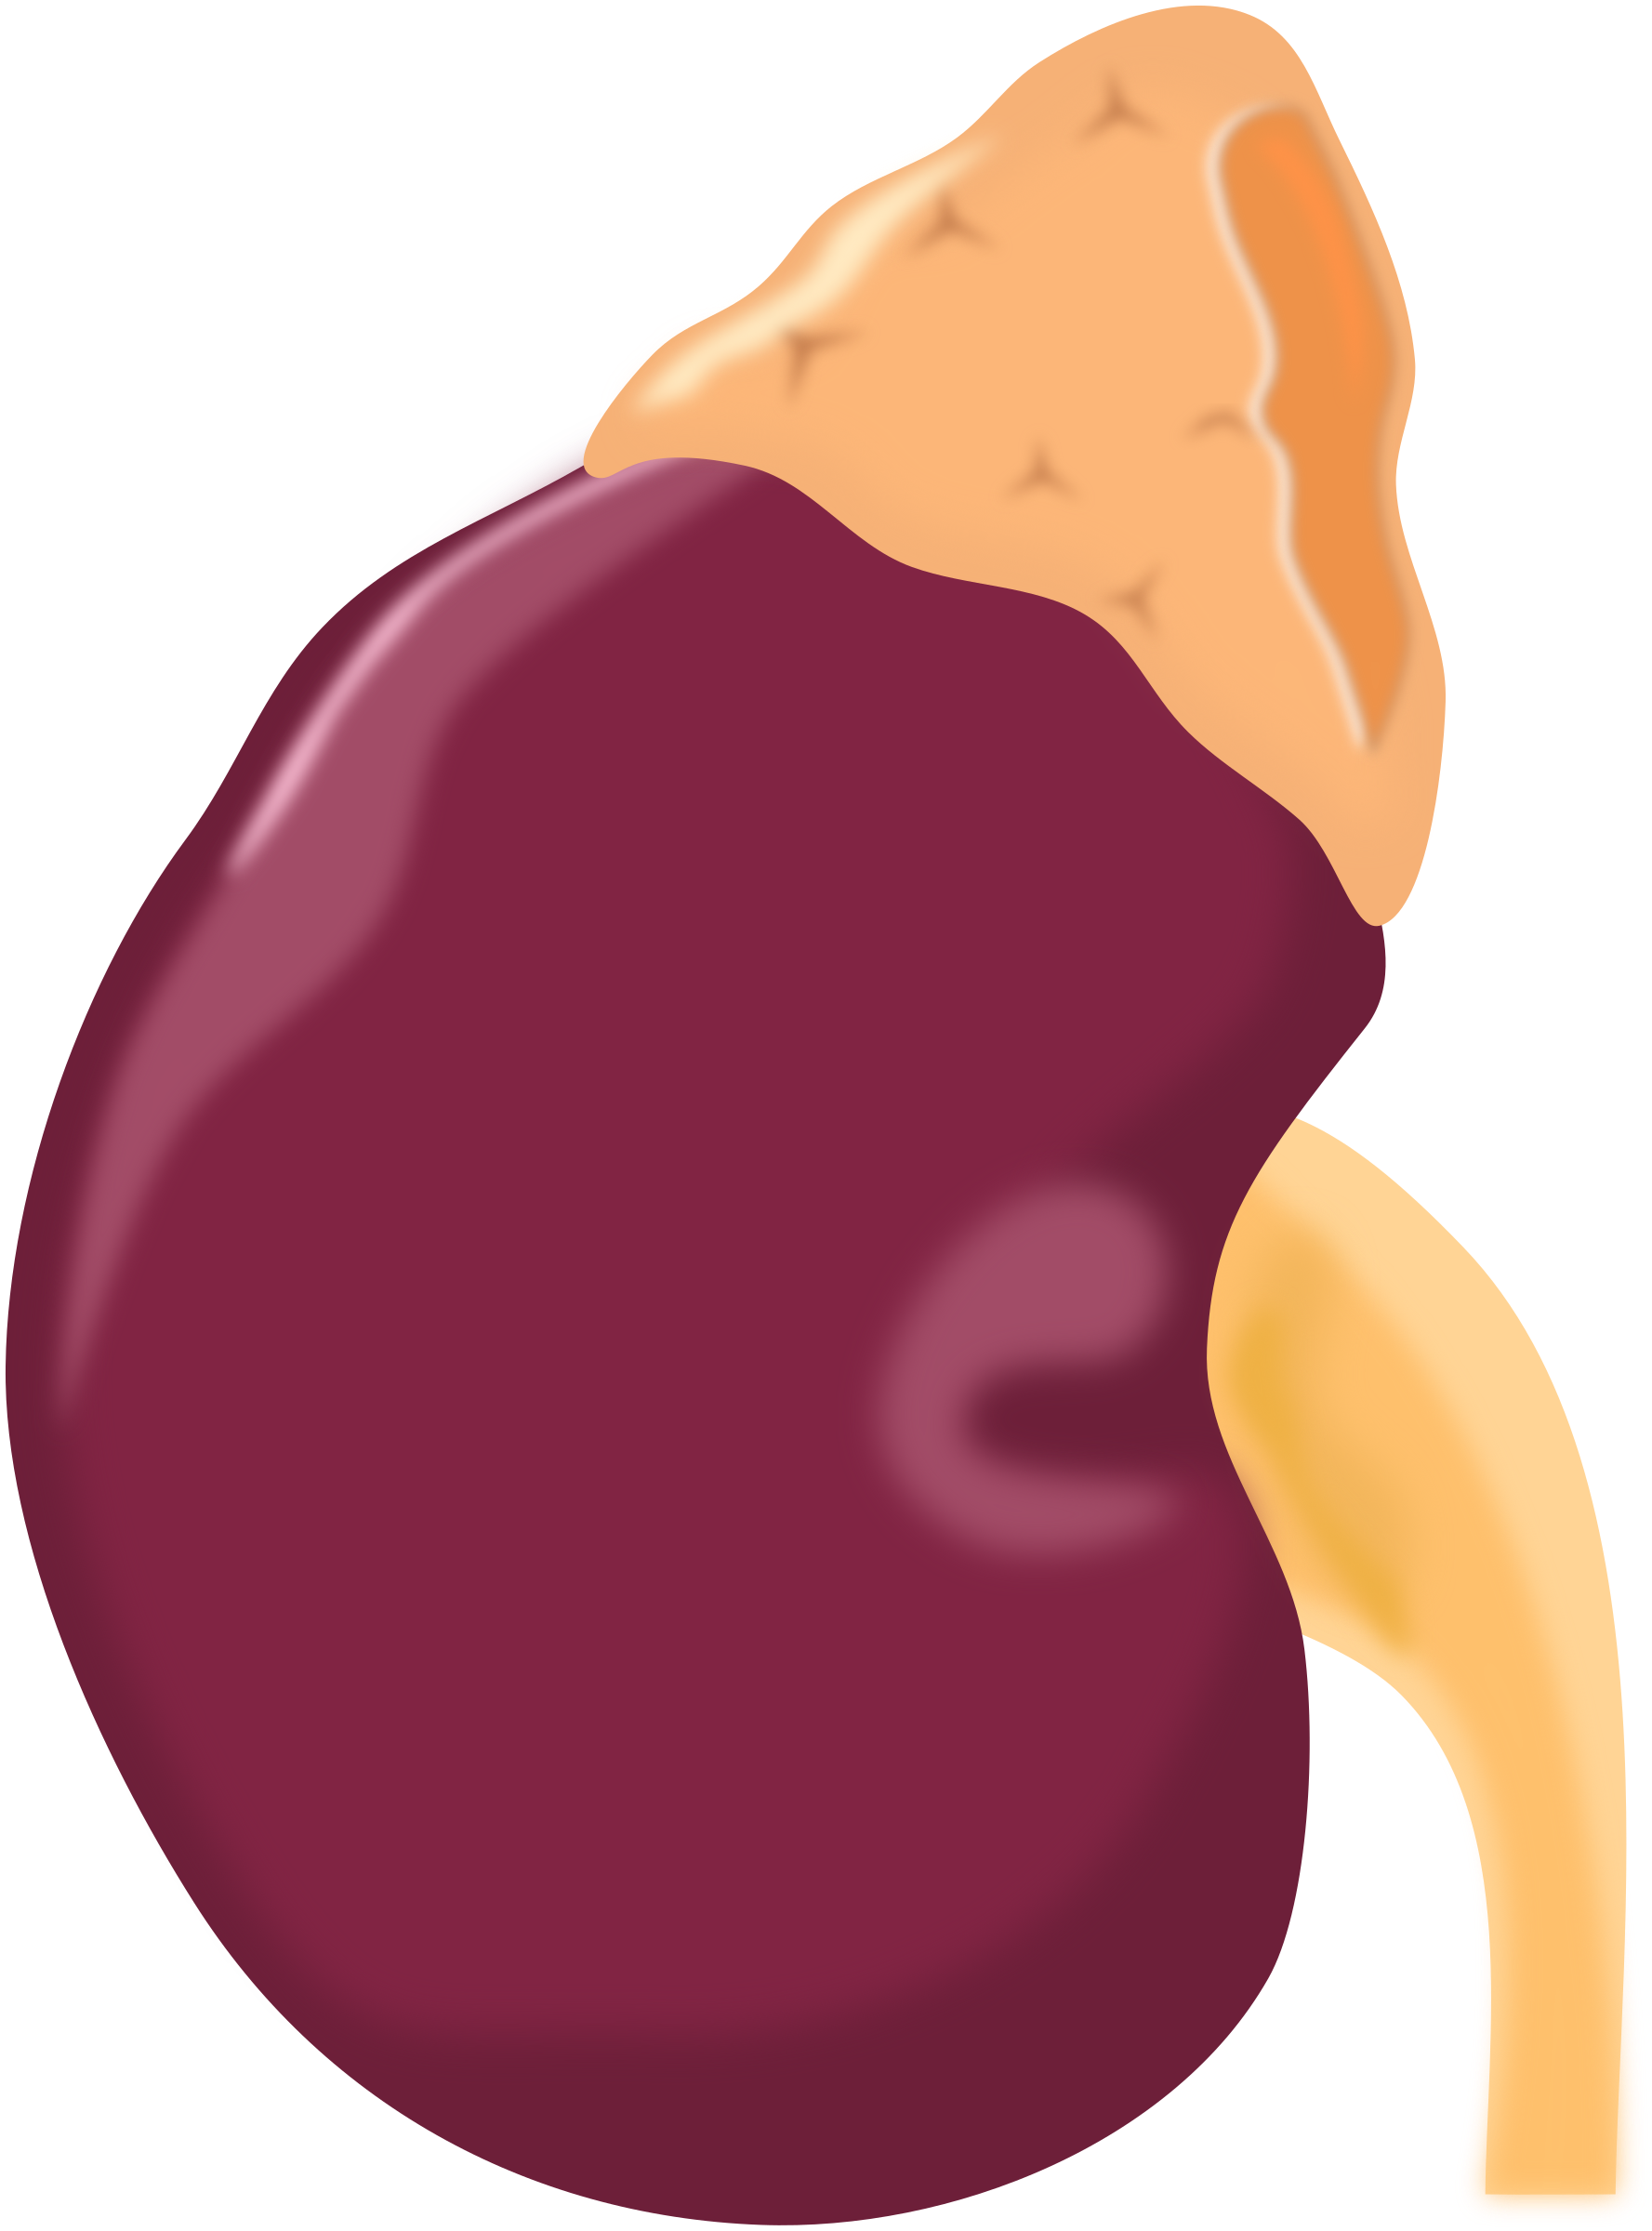 kidney clipart healthy kidney